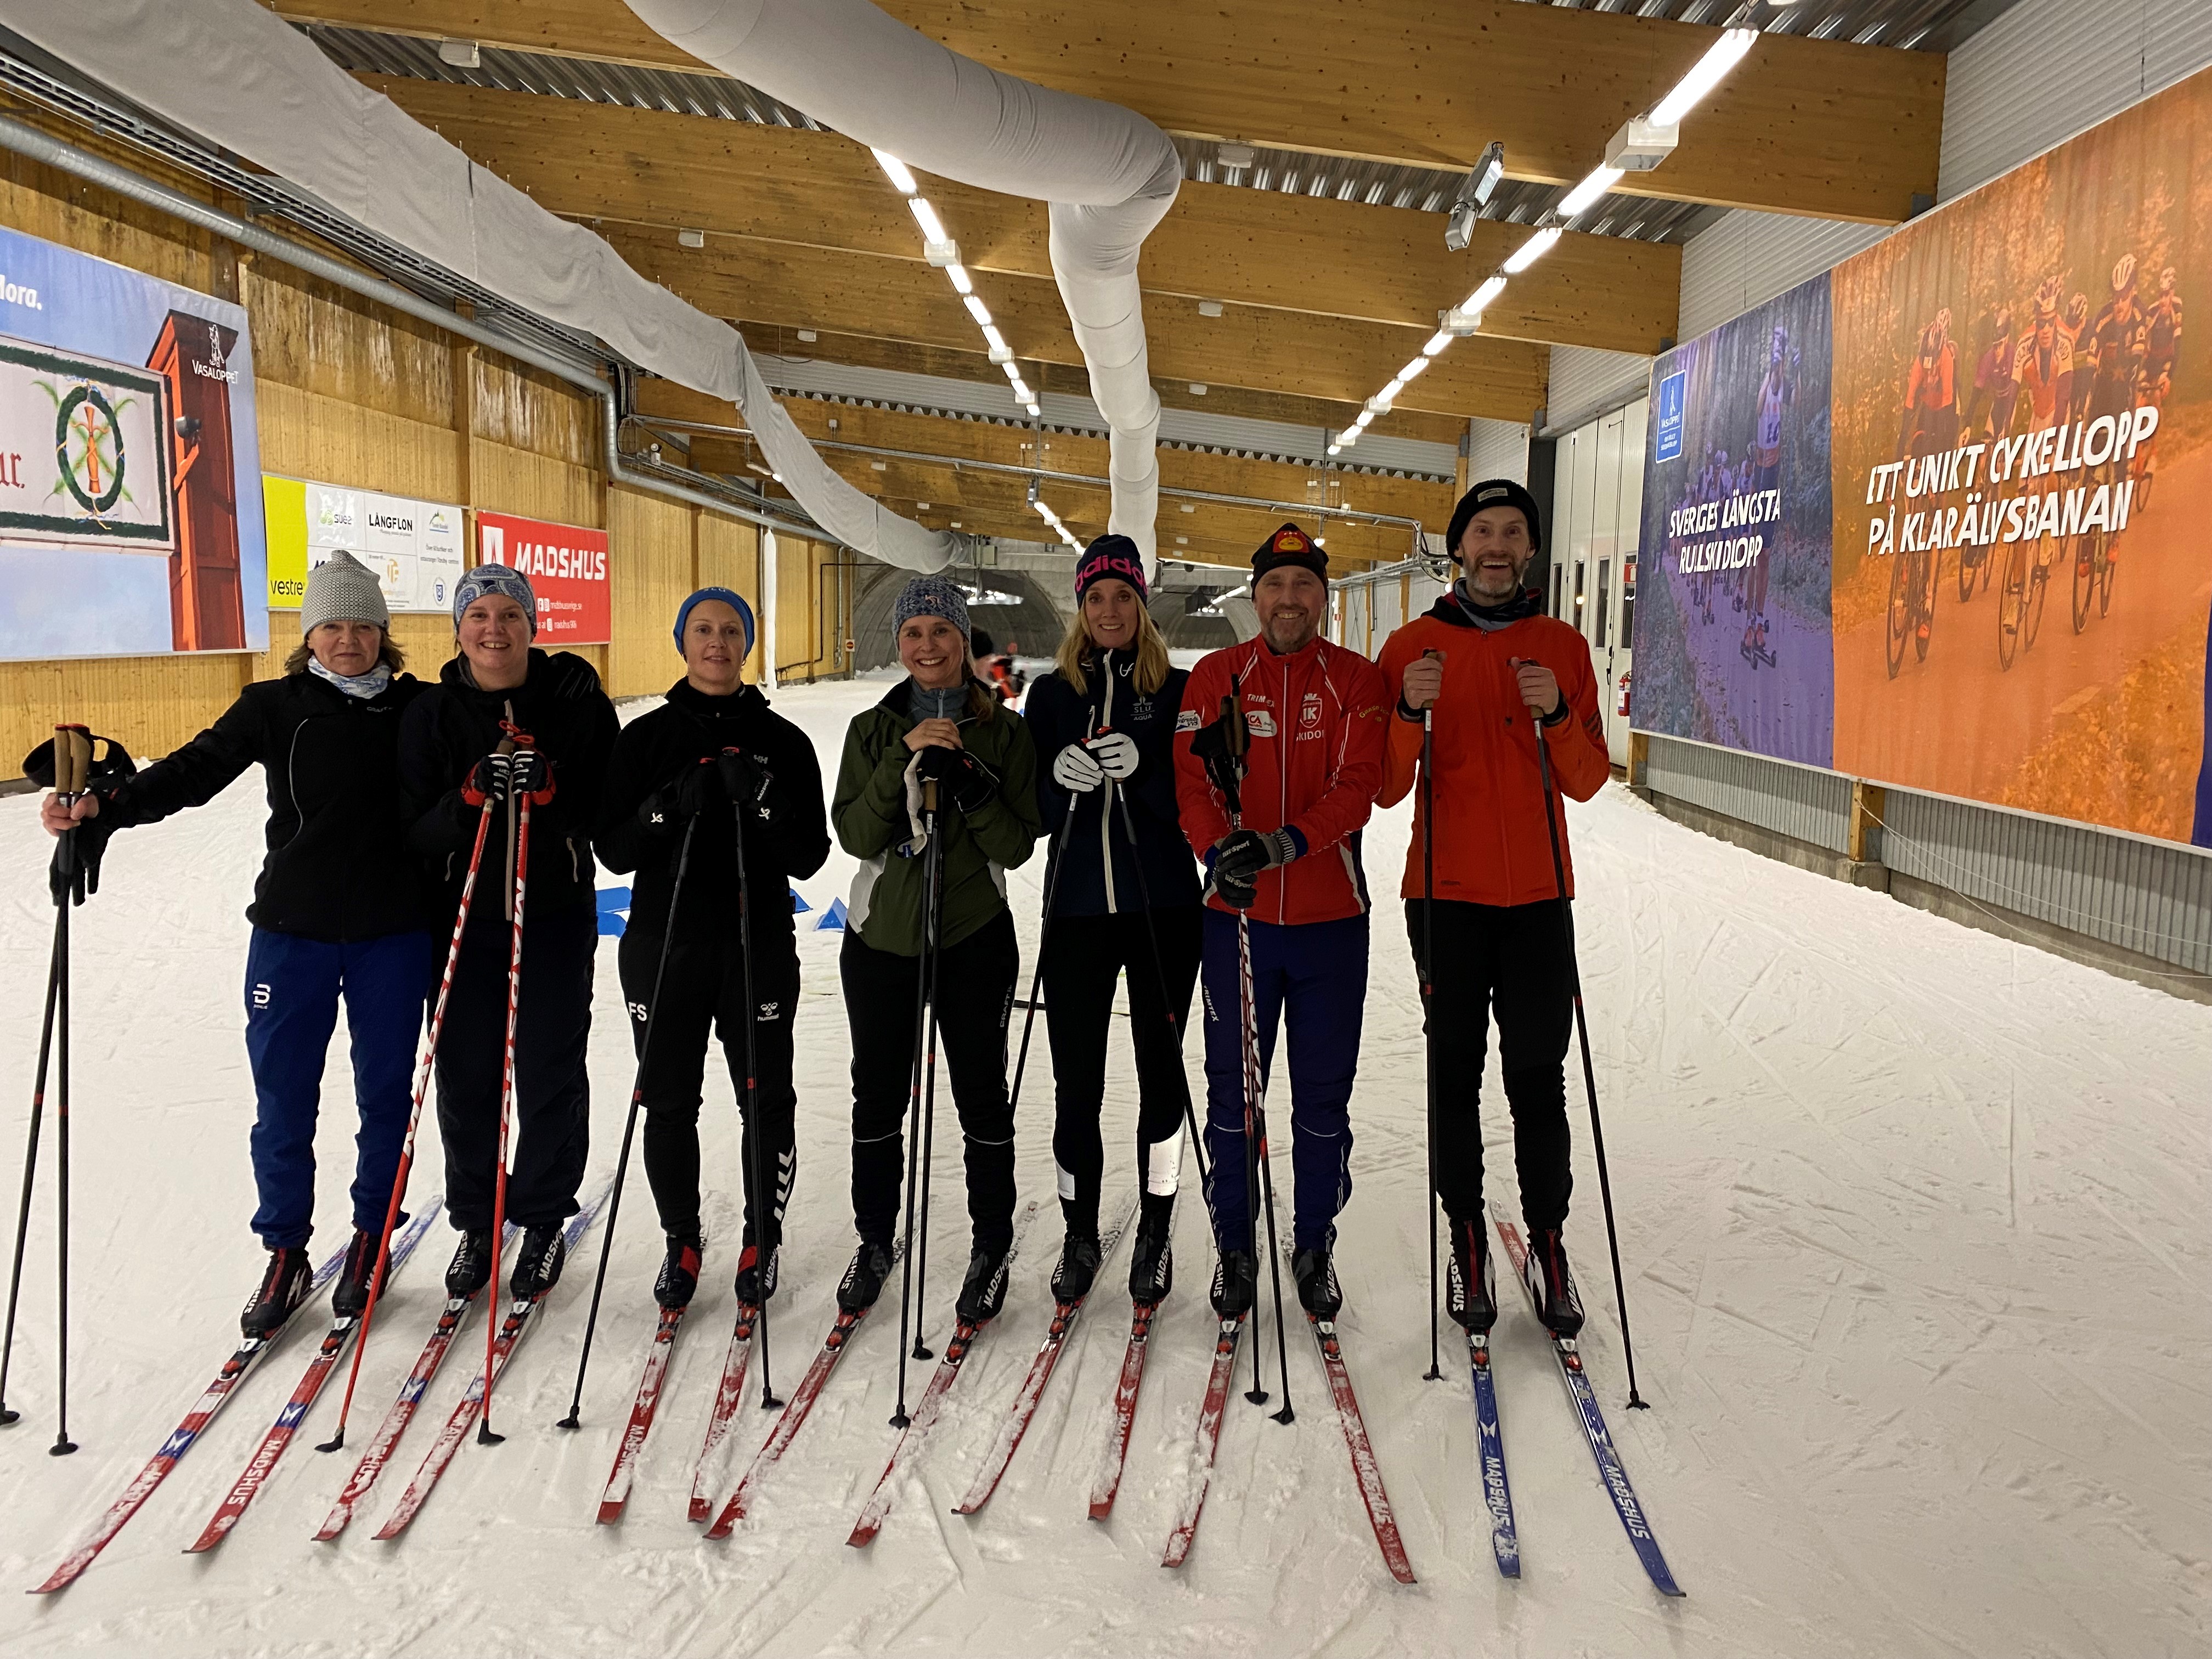 The SAMSAS-group skiing